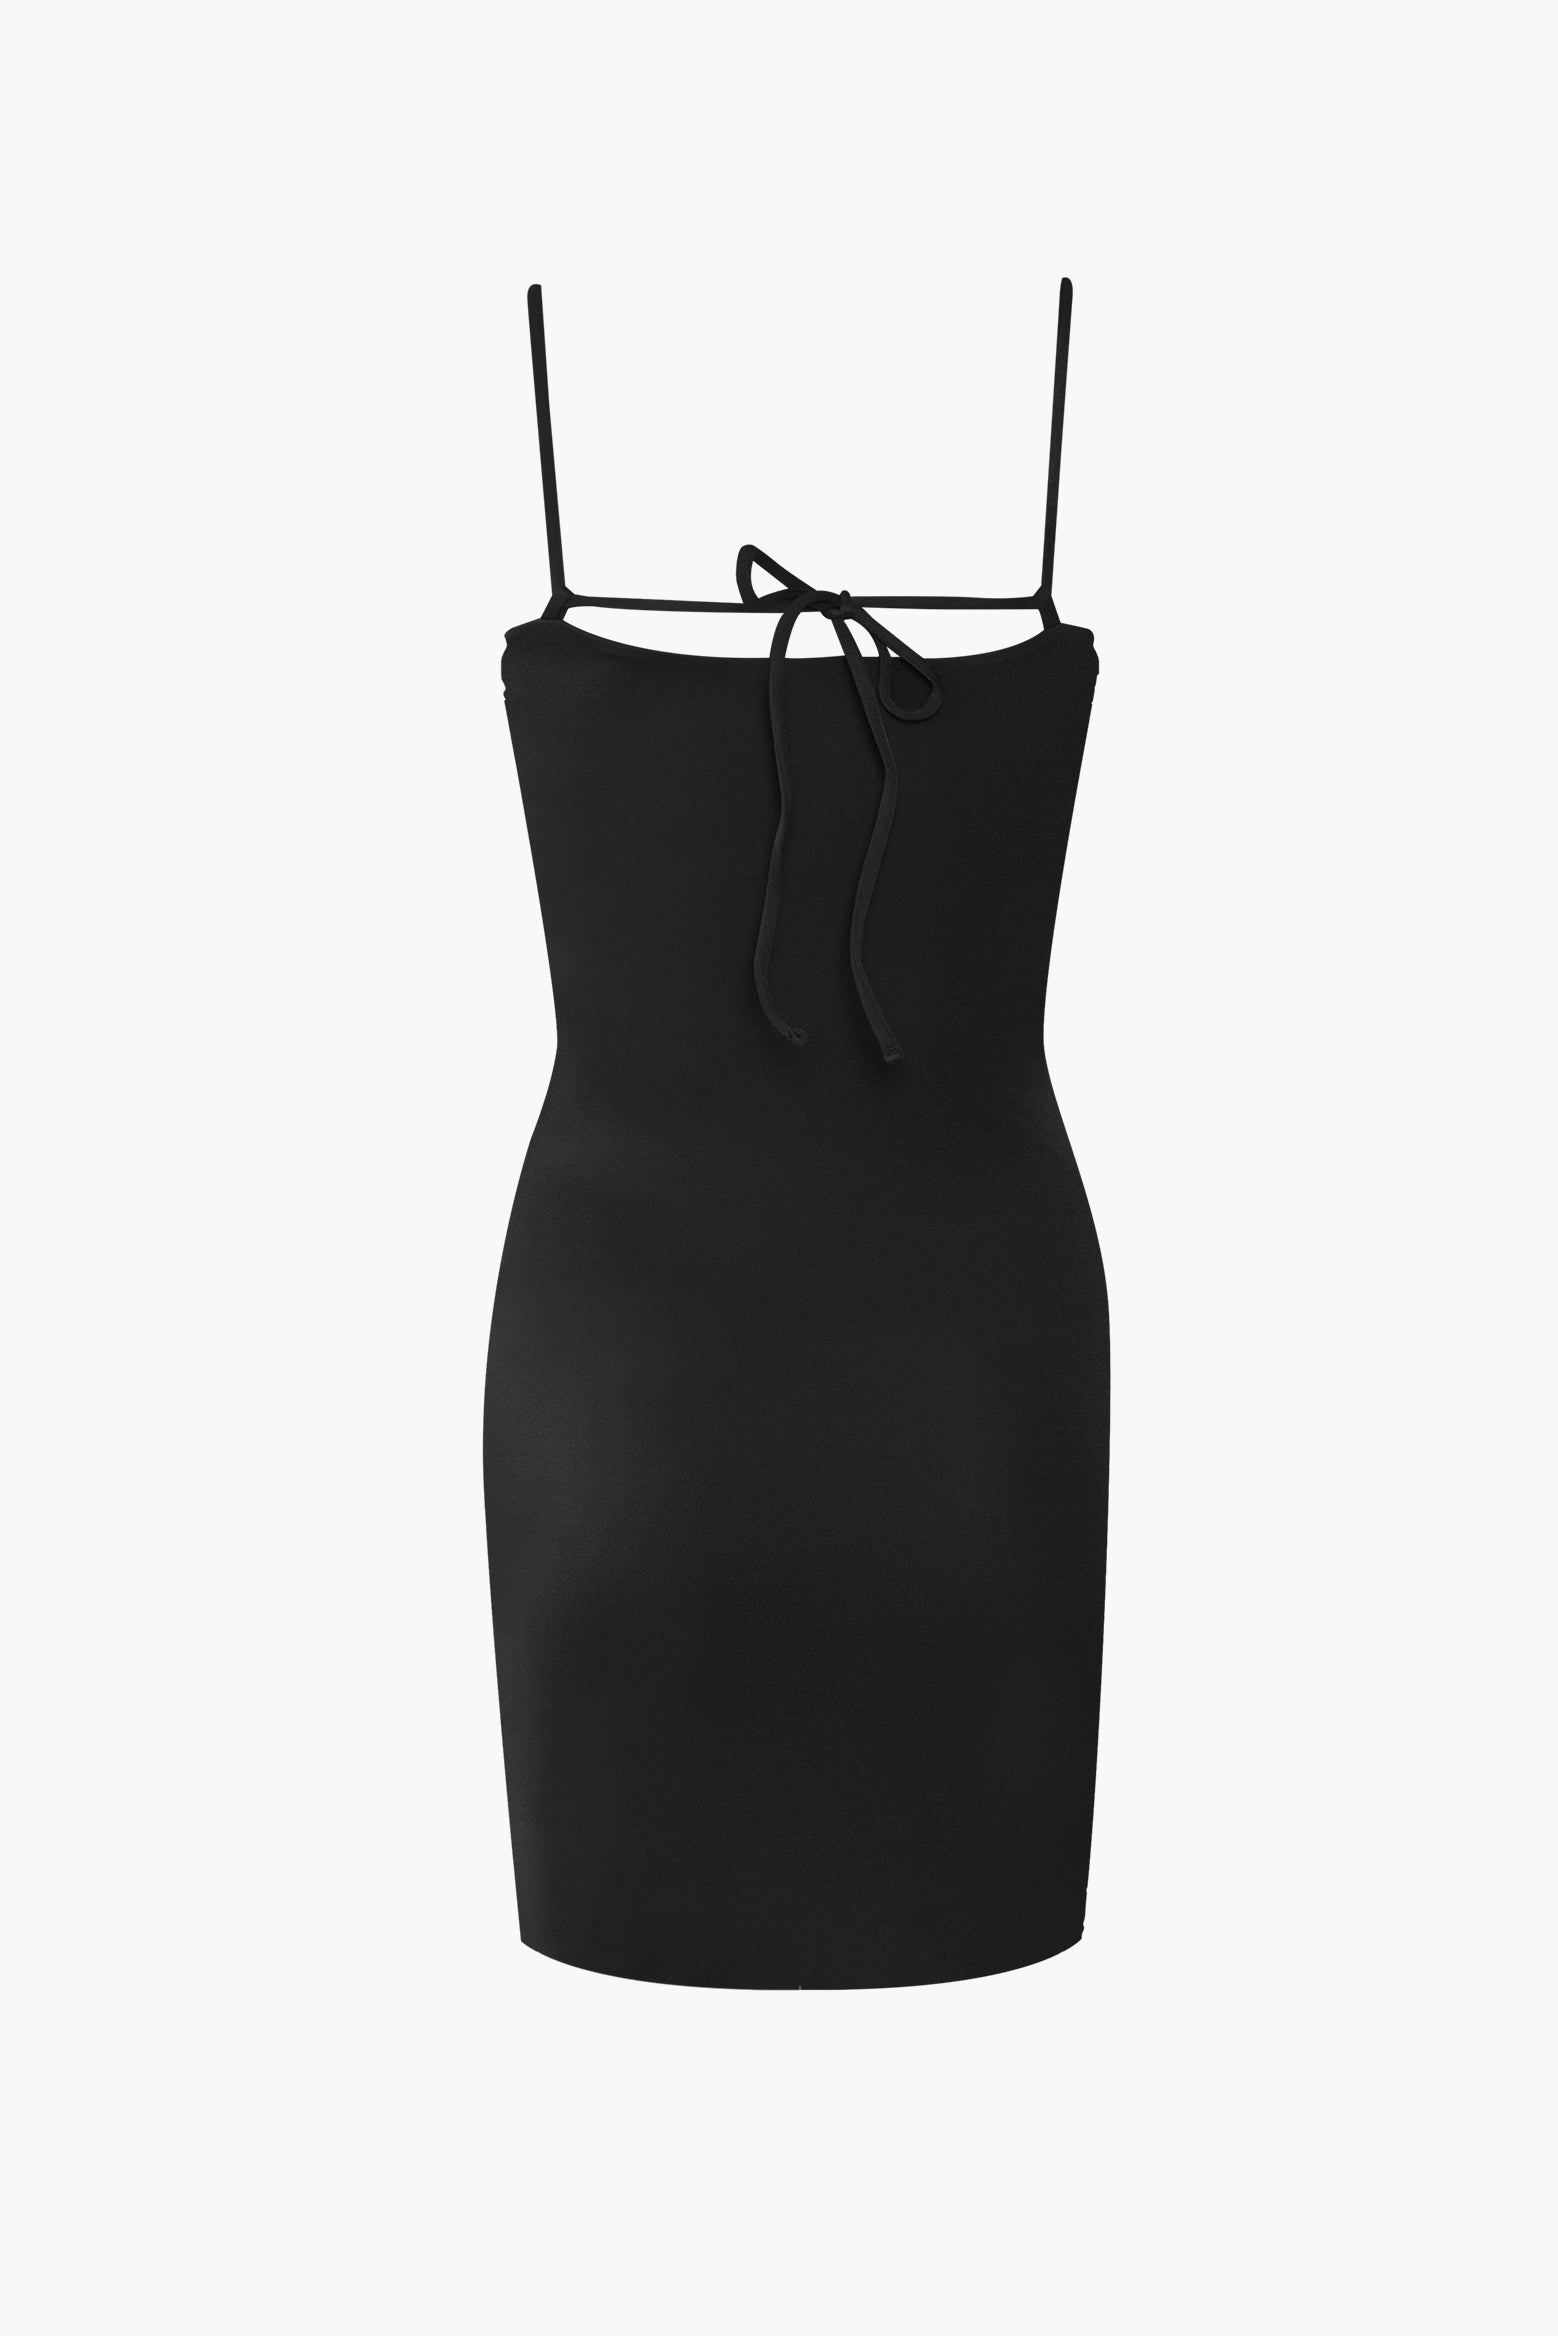 Maygel Coronel Coari Dress in Black available at The New Trend Australia.